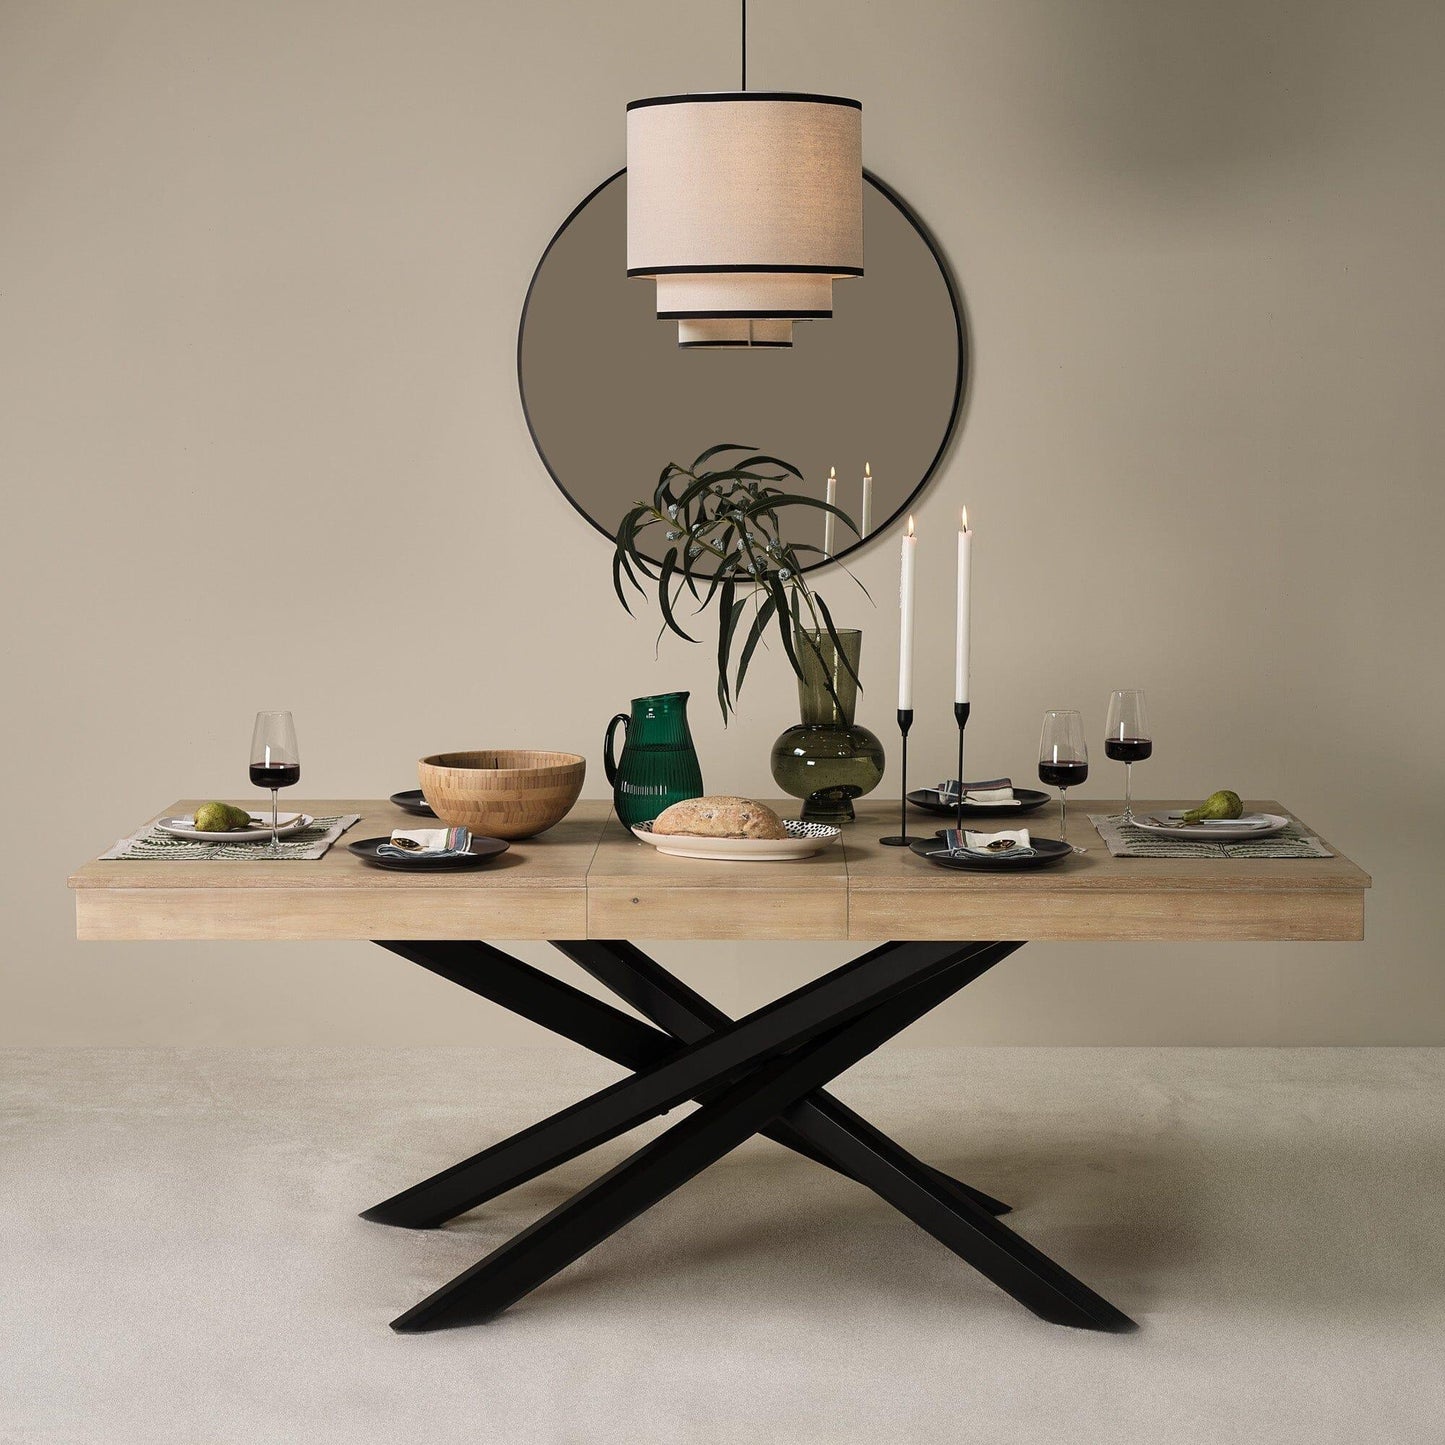 Amelia Whitewash wood extendable dining table - black legs